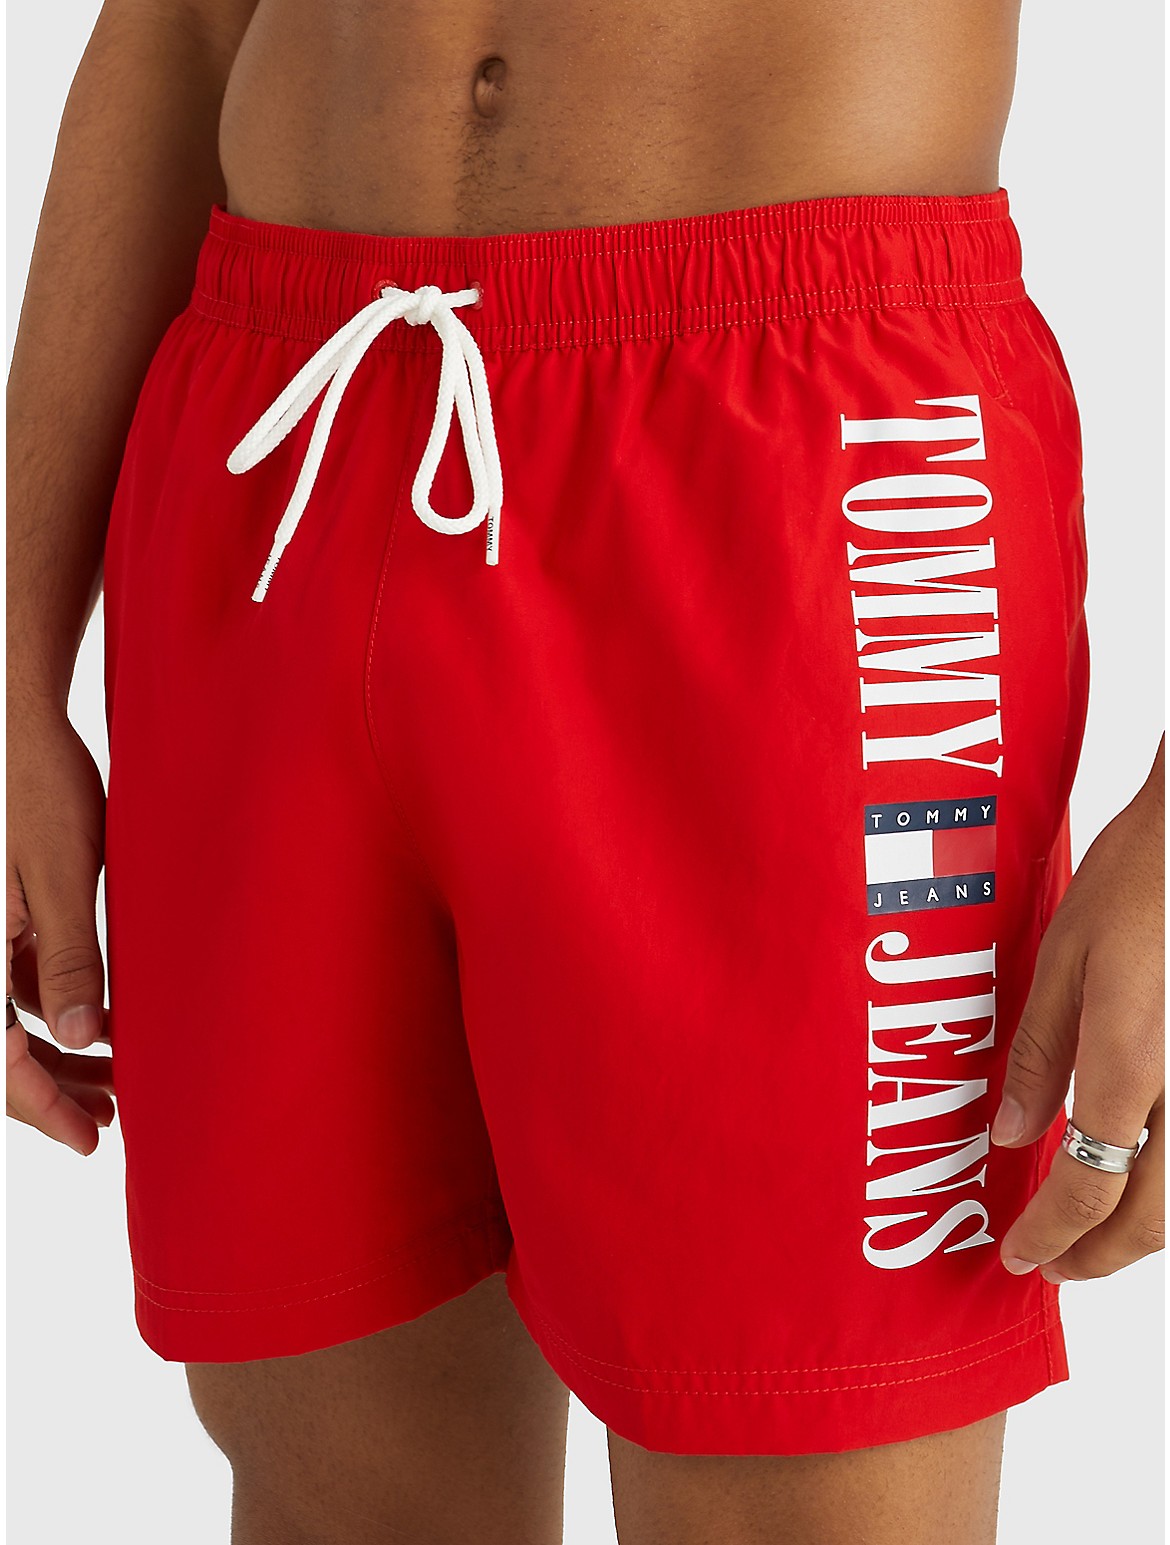 Tommy Hilfiger Men's Logo Print 7" Swim Trunk - Red - XXL